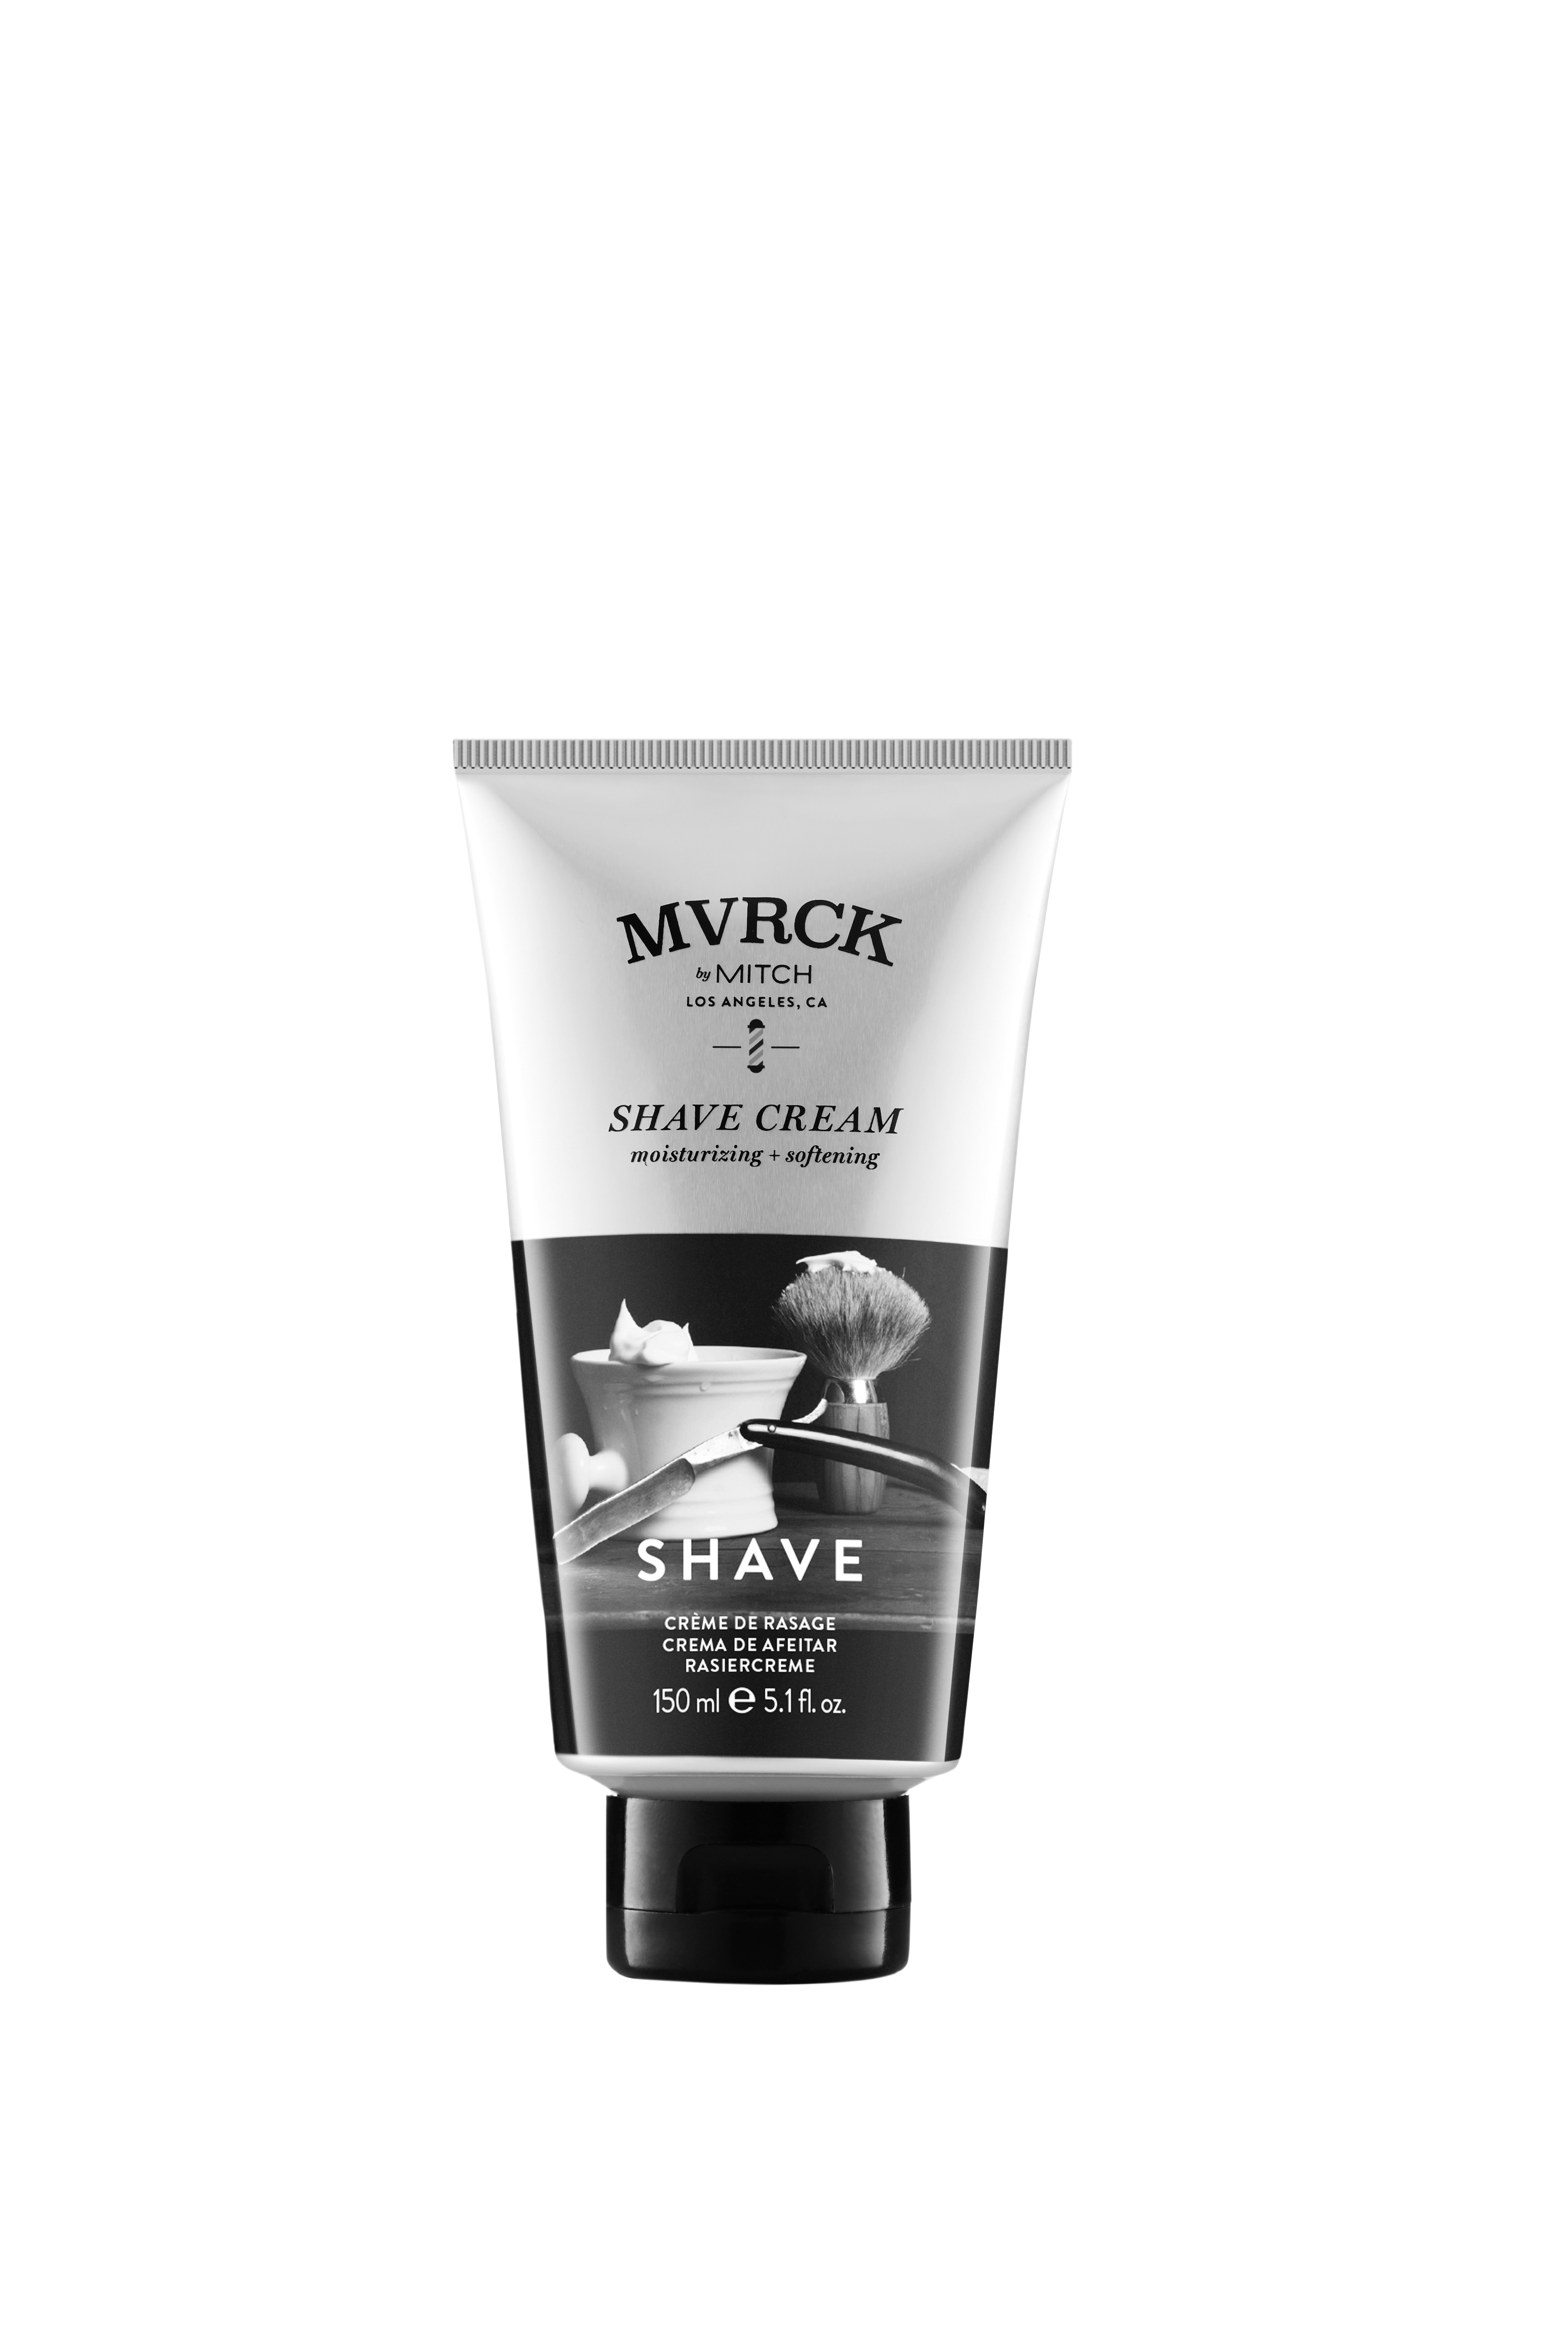 MVRCK Shave Cream 150ml